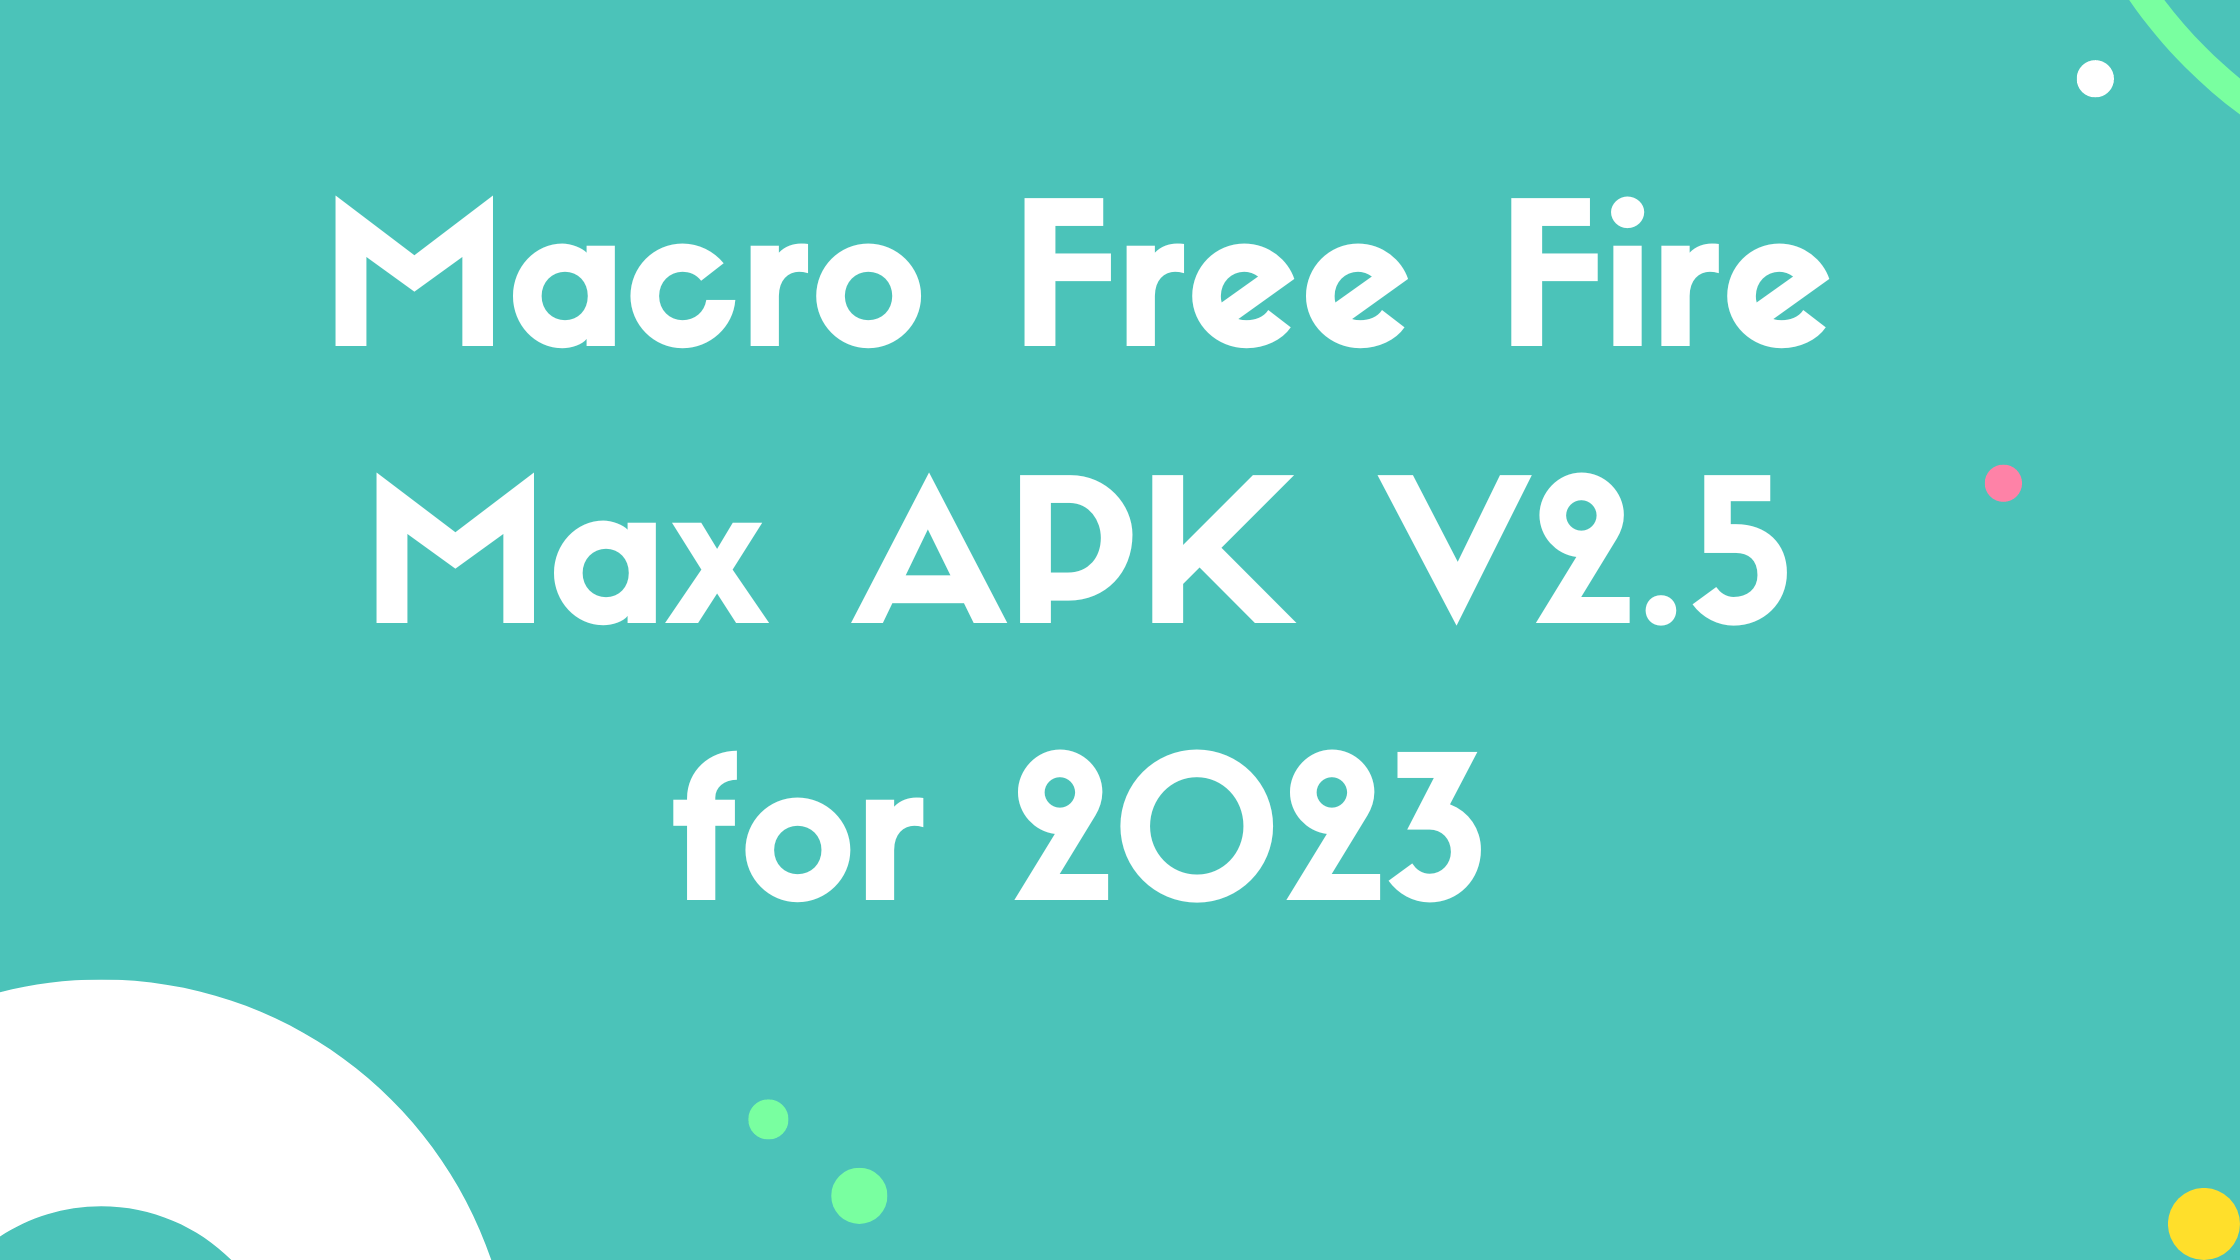 Macro Free Fire Max APK V2.5 for 2023